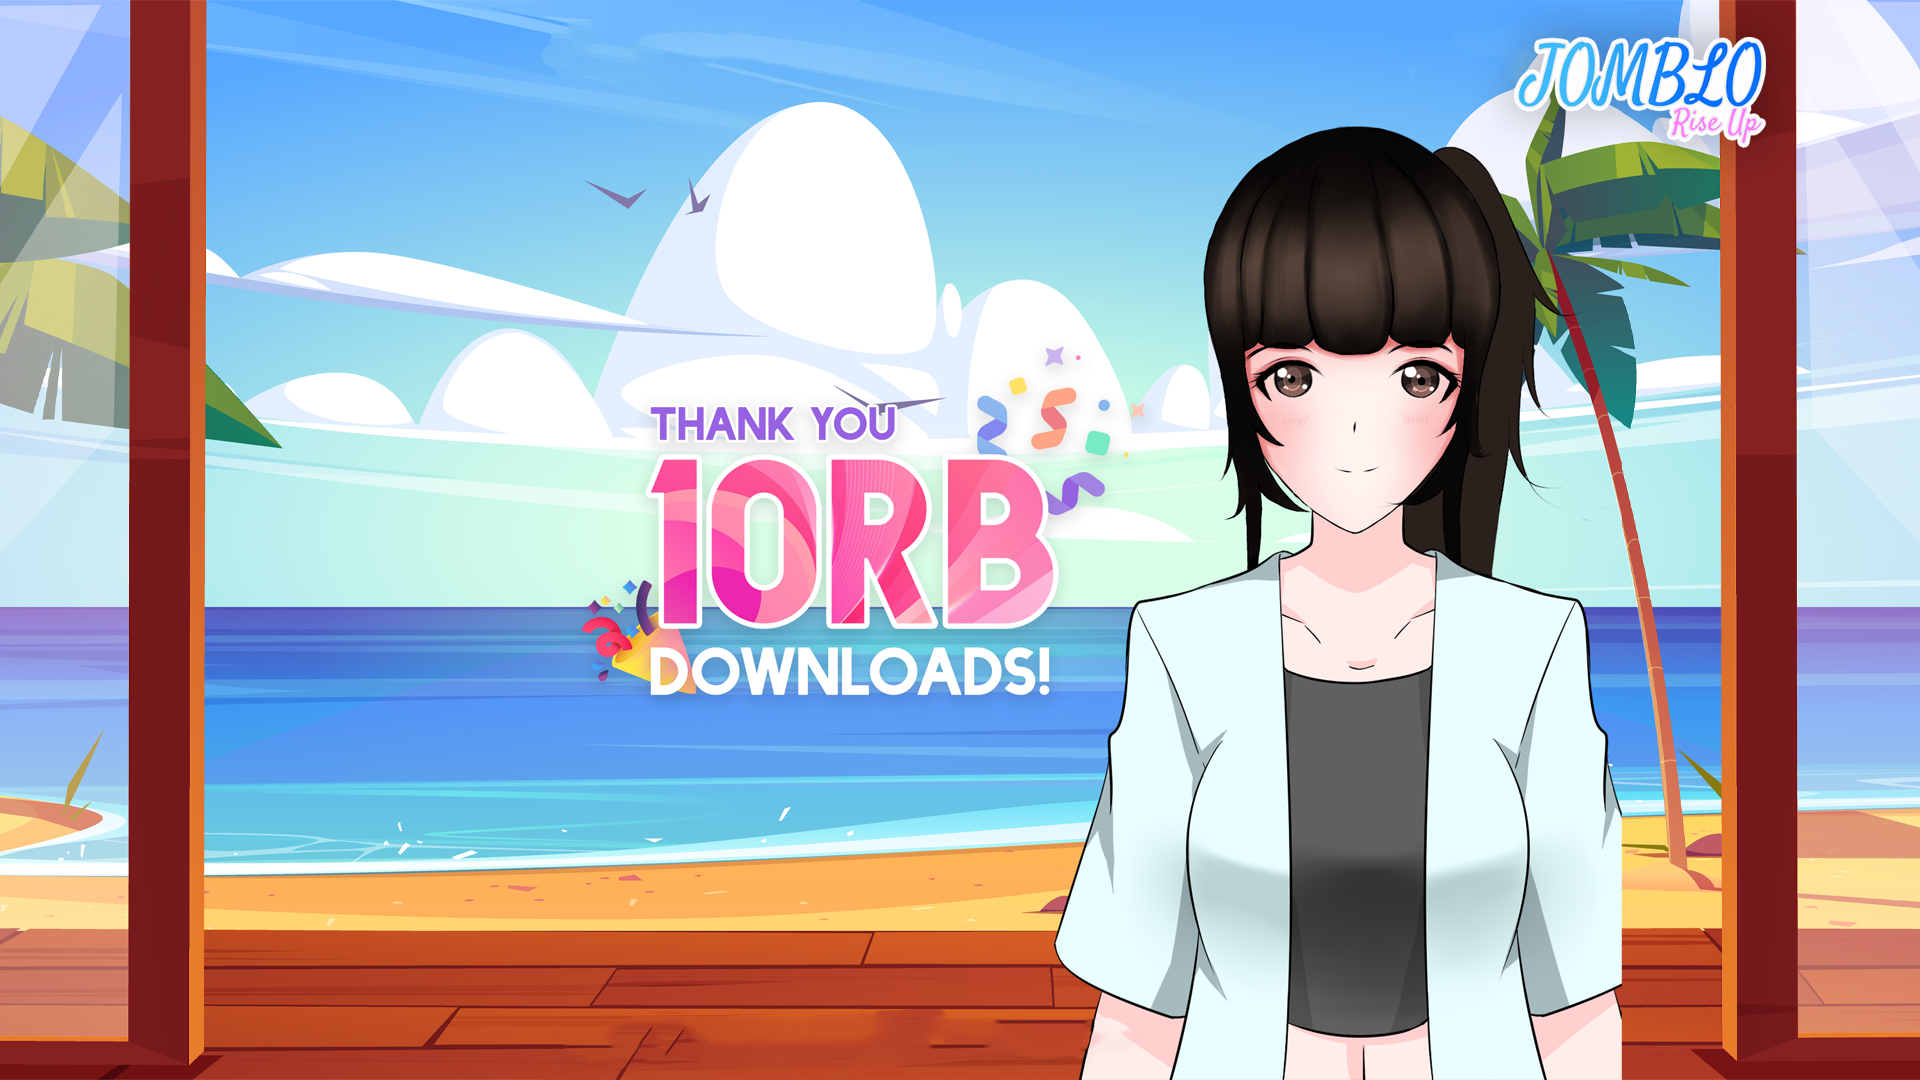 Jomblo Rise Up Has Reached 10K Downloads!